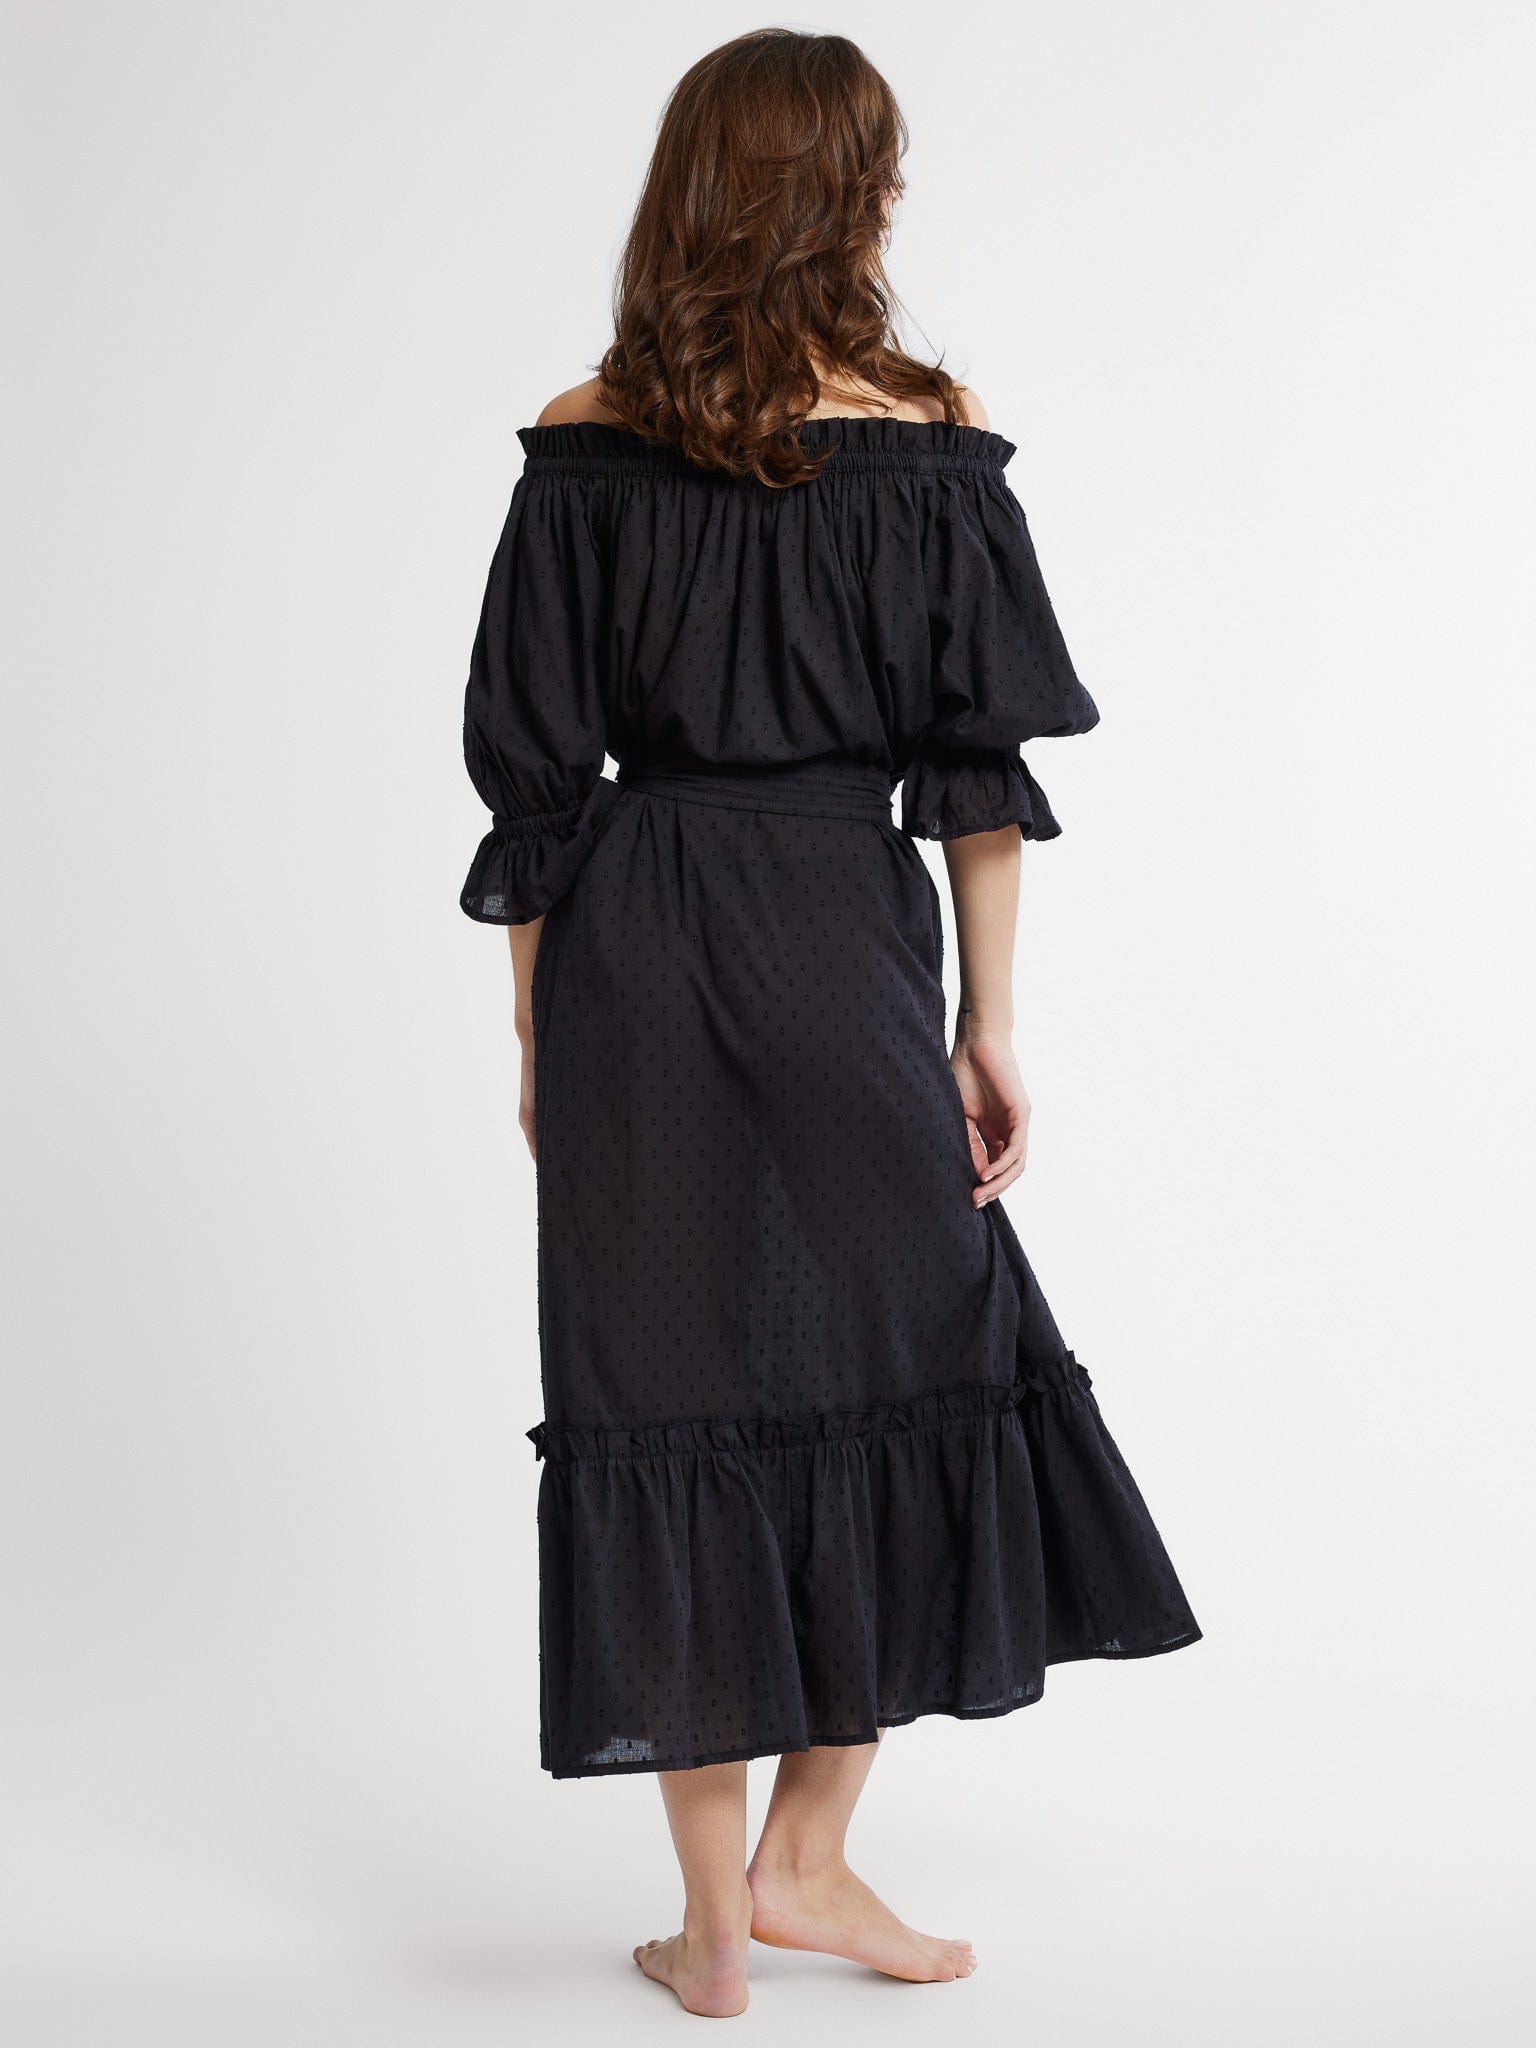 MILLE Clothing Paloma Dress in Black Swiss Dot